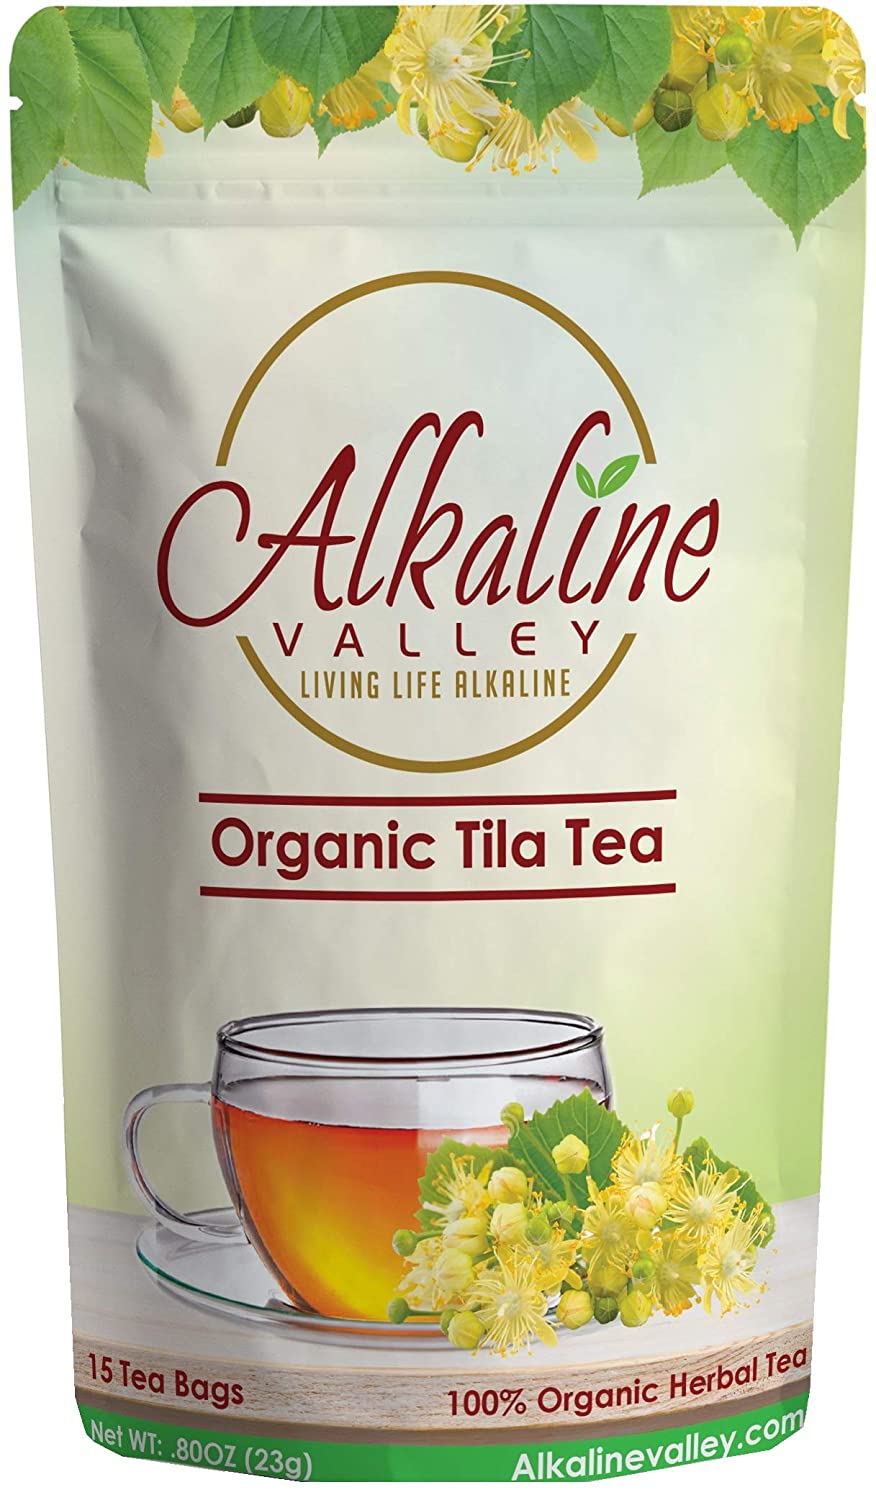 Linden Flower Tea, Tila Tea or Te De Tila - 100% Organic and Alkaline - 15 Unbleached/Chemical-Free Linden Tea Bags - Caffeine-Free, No GMO - image 1 of 3